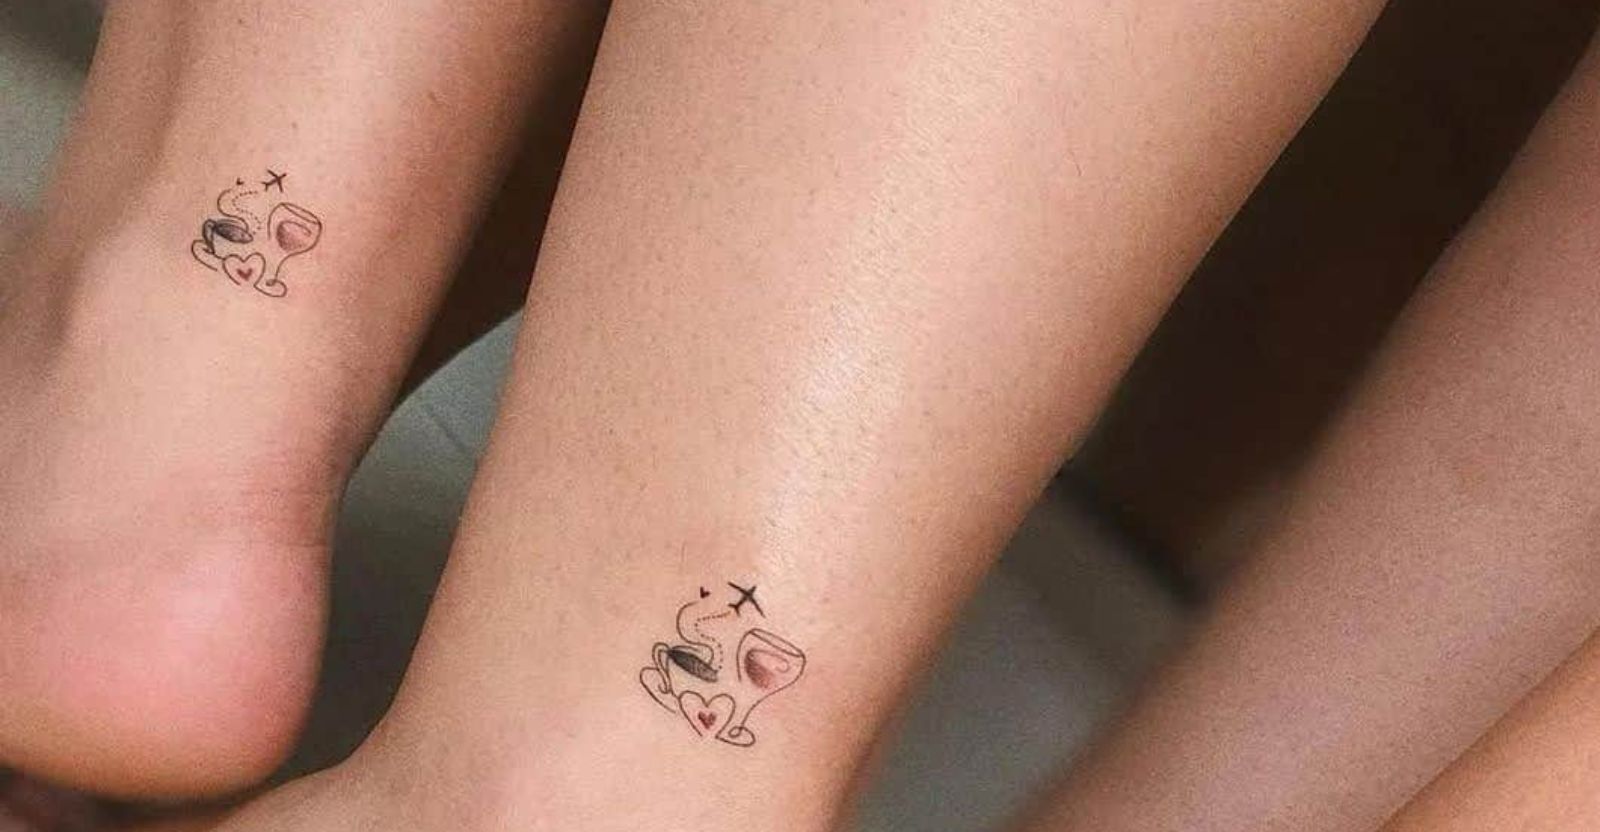 Bestfriend matching tattoo